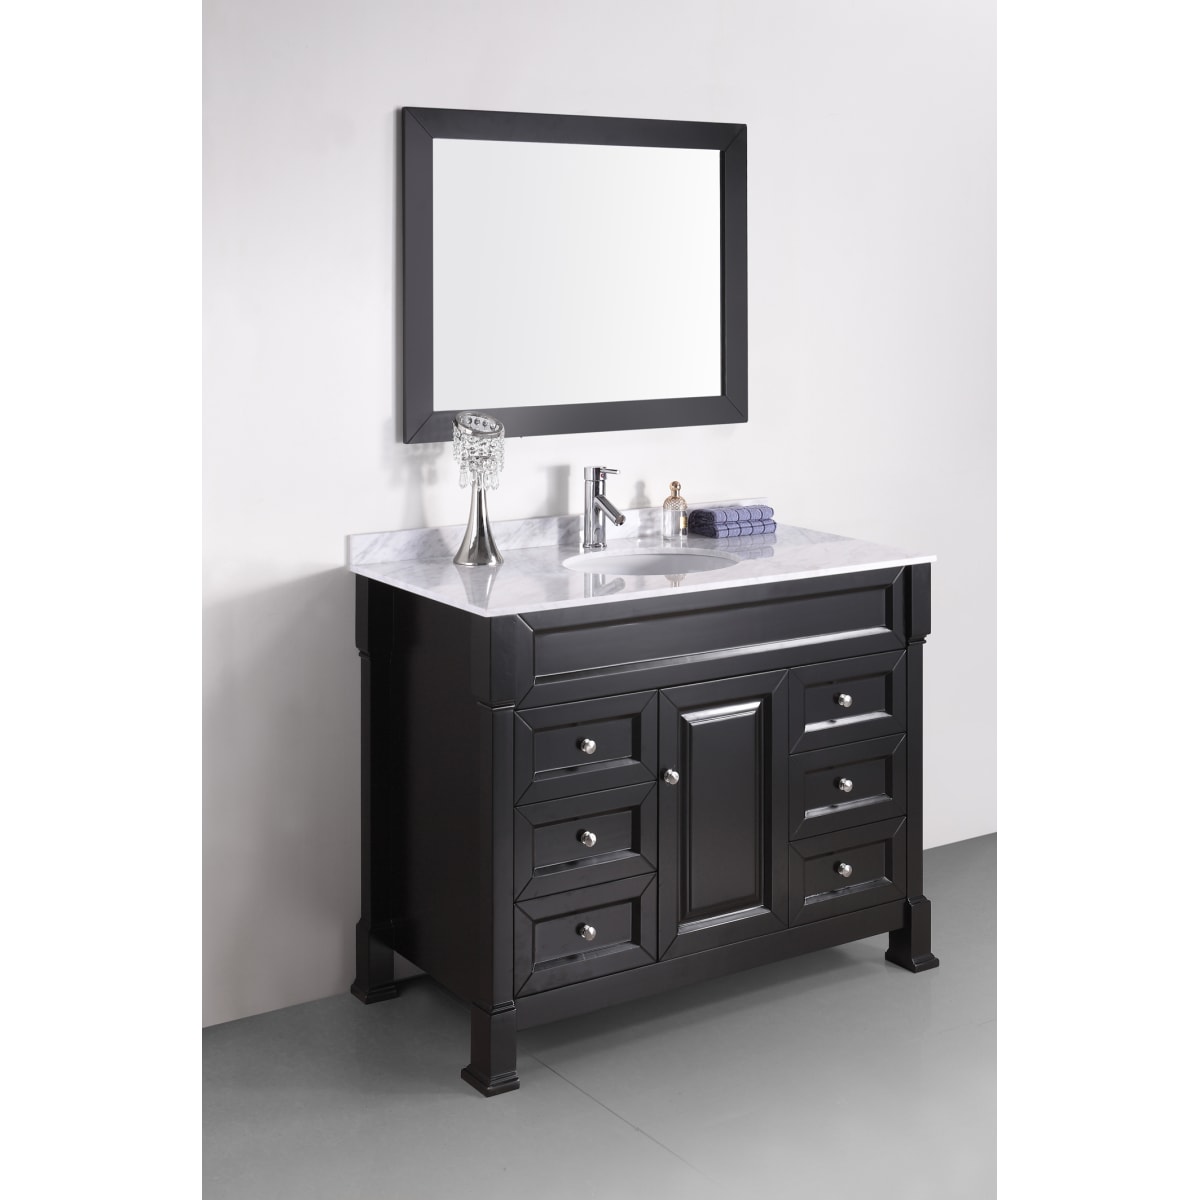 Bathroom Vanity Cabinet, Virtu Usa Vanity Installation